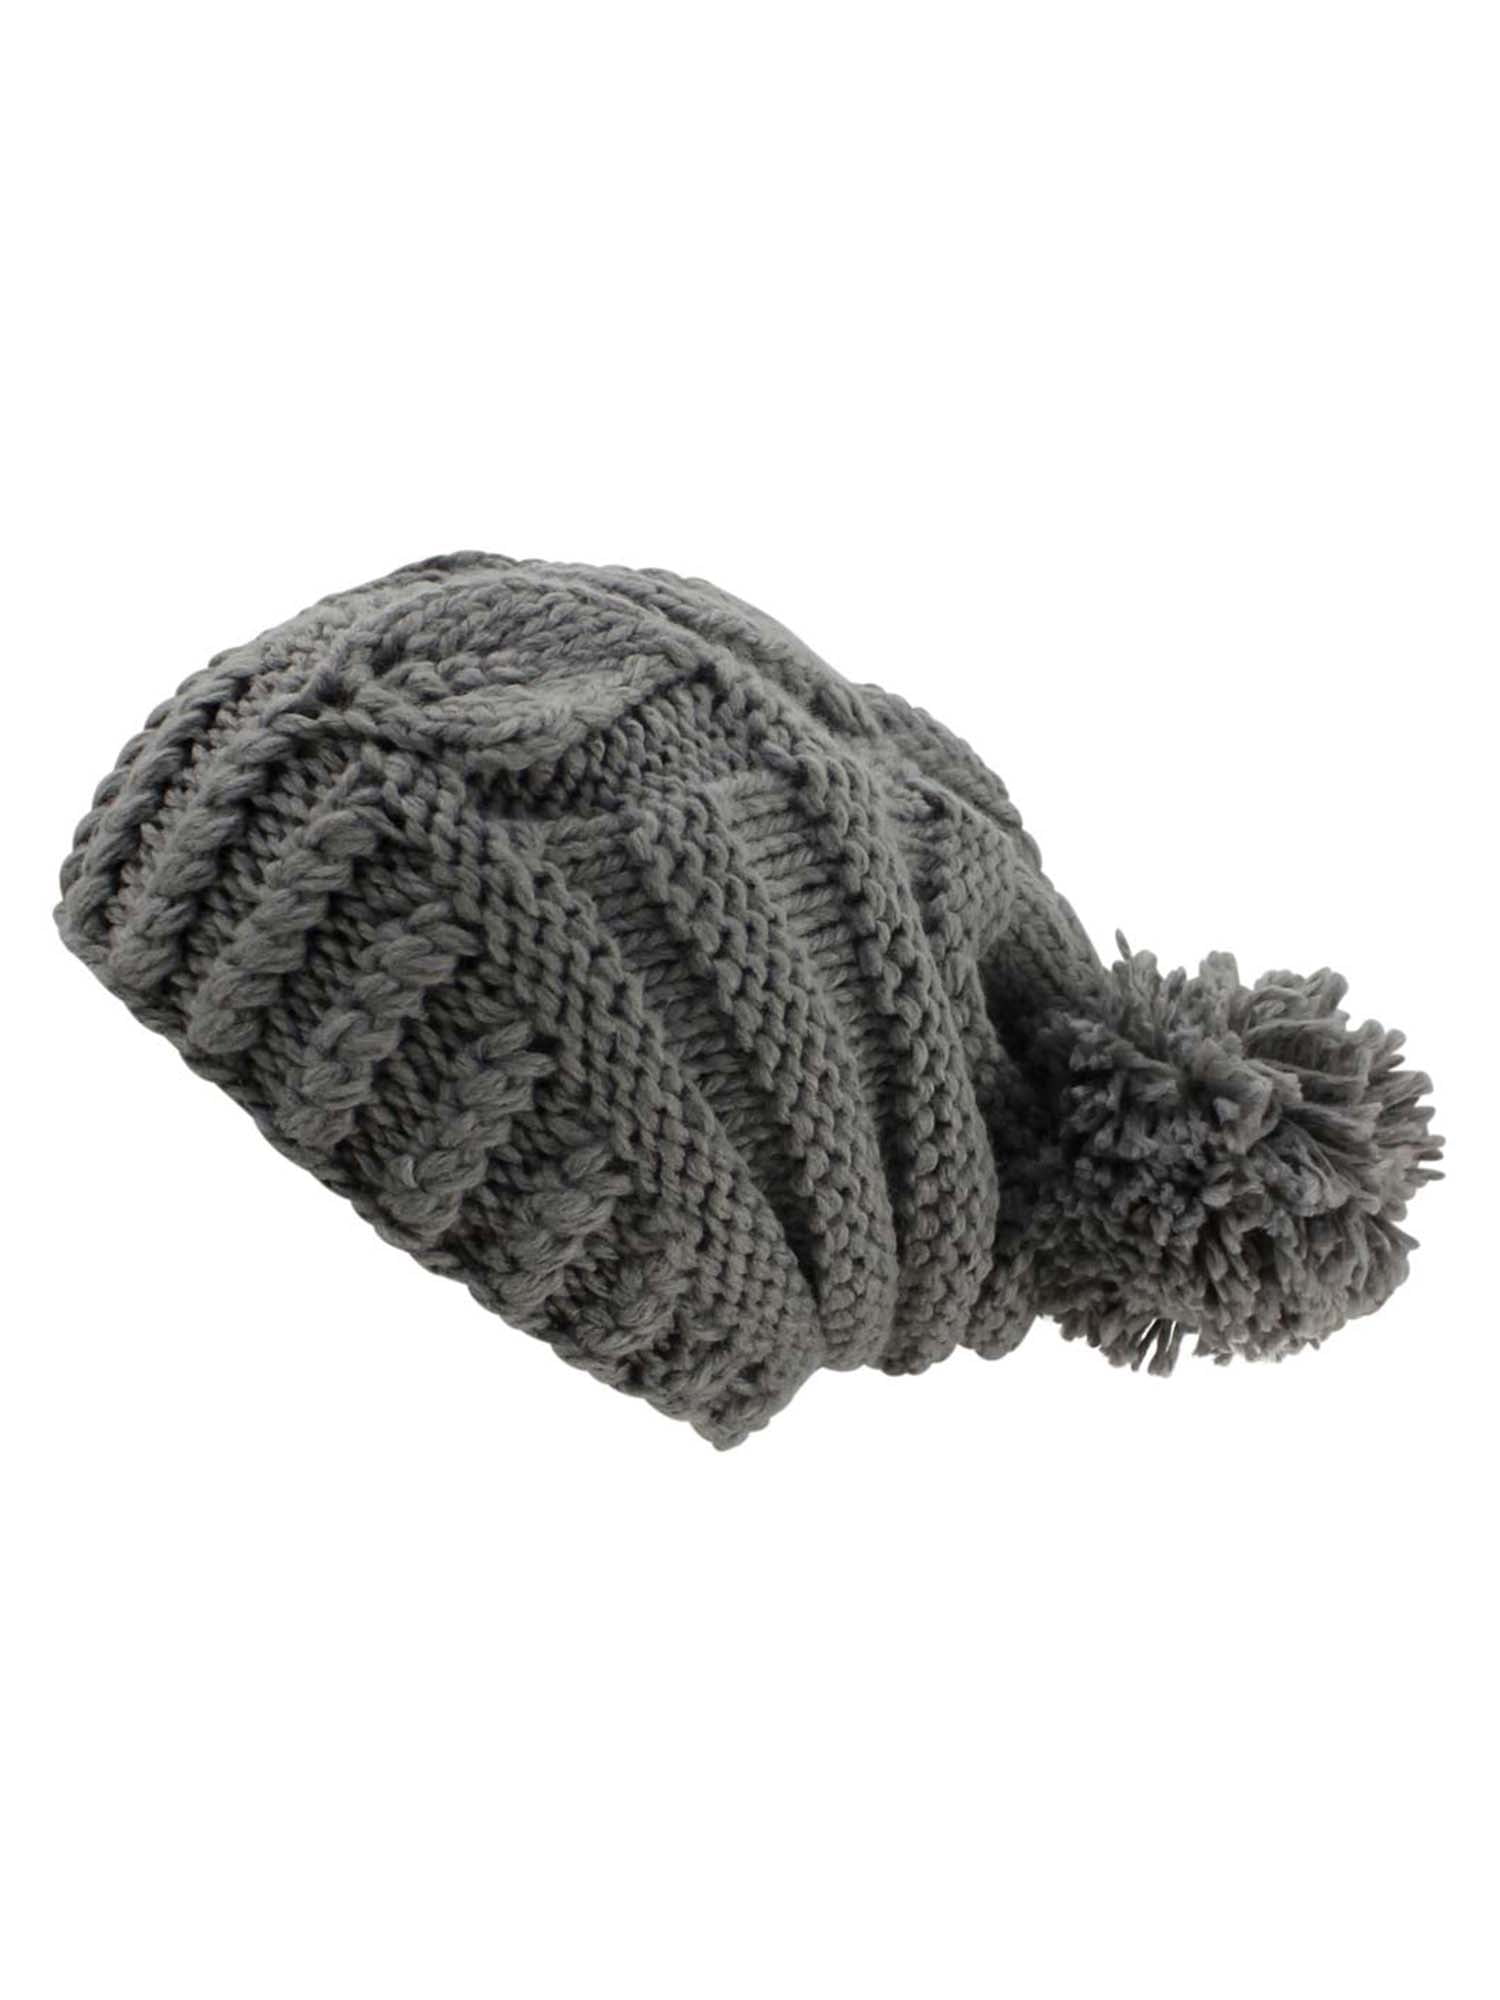 Grey Slouchy Winter Hat Knit Pom Pom With Cable Beanie